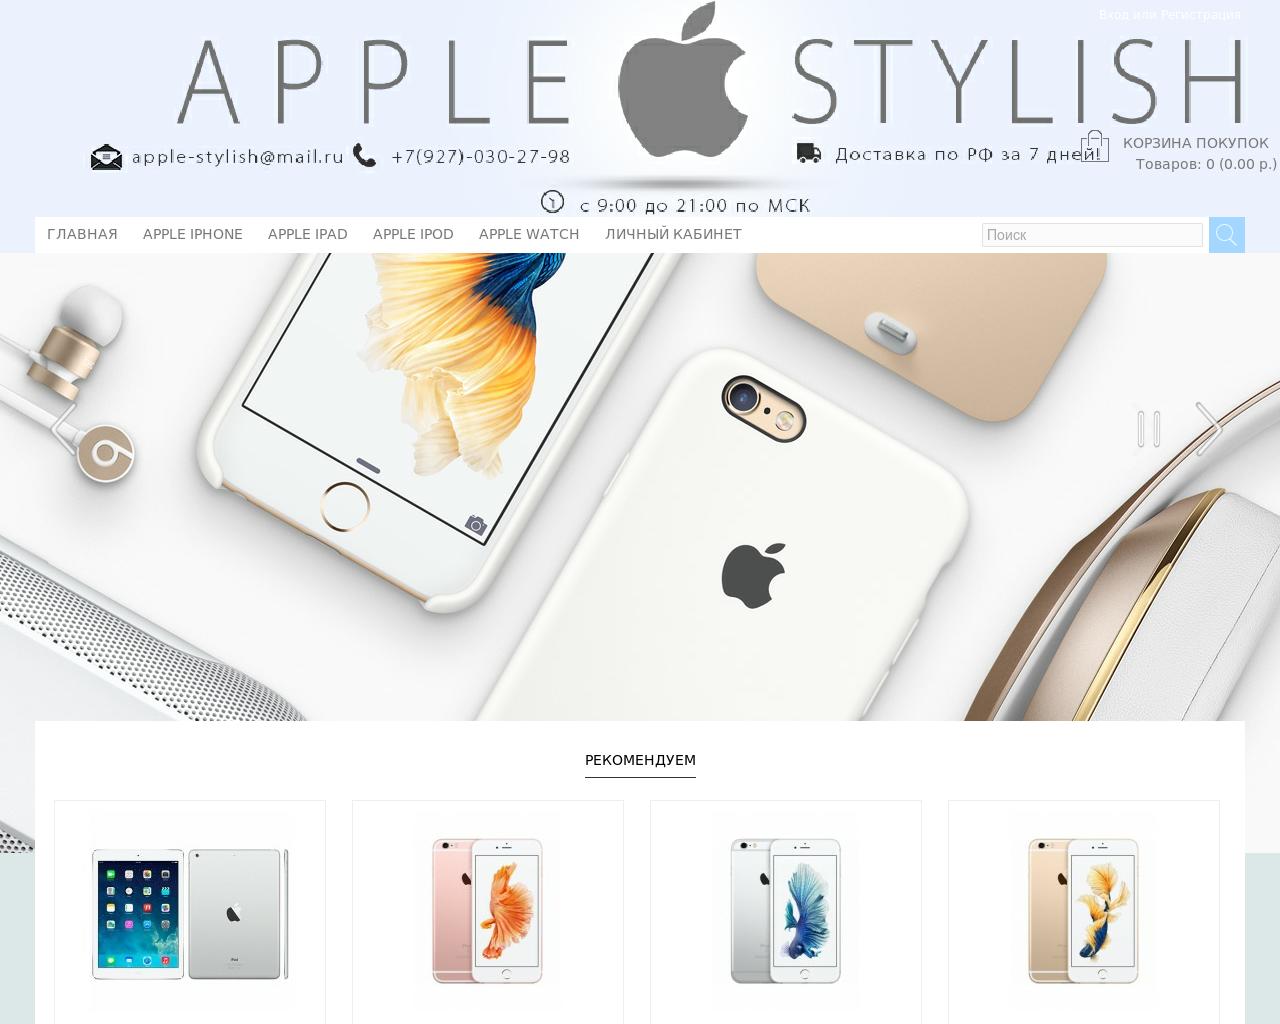 Изображение сайта apple-stylish.ru в разрешении 1280x1024